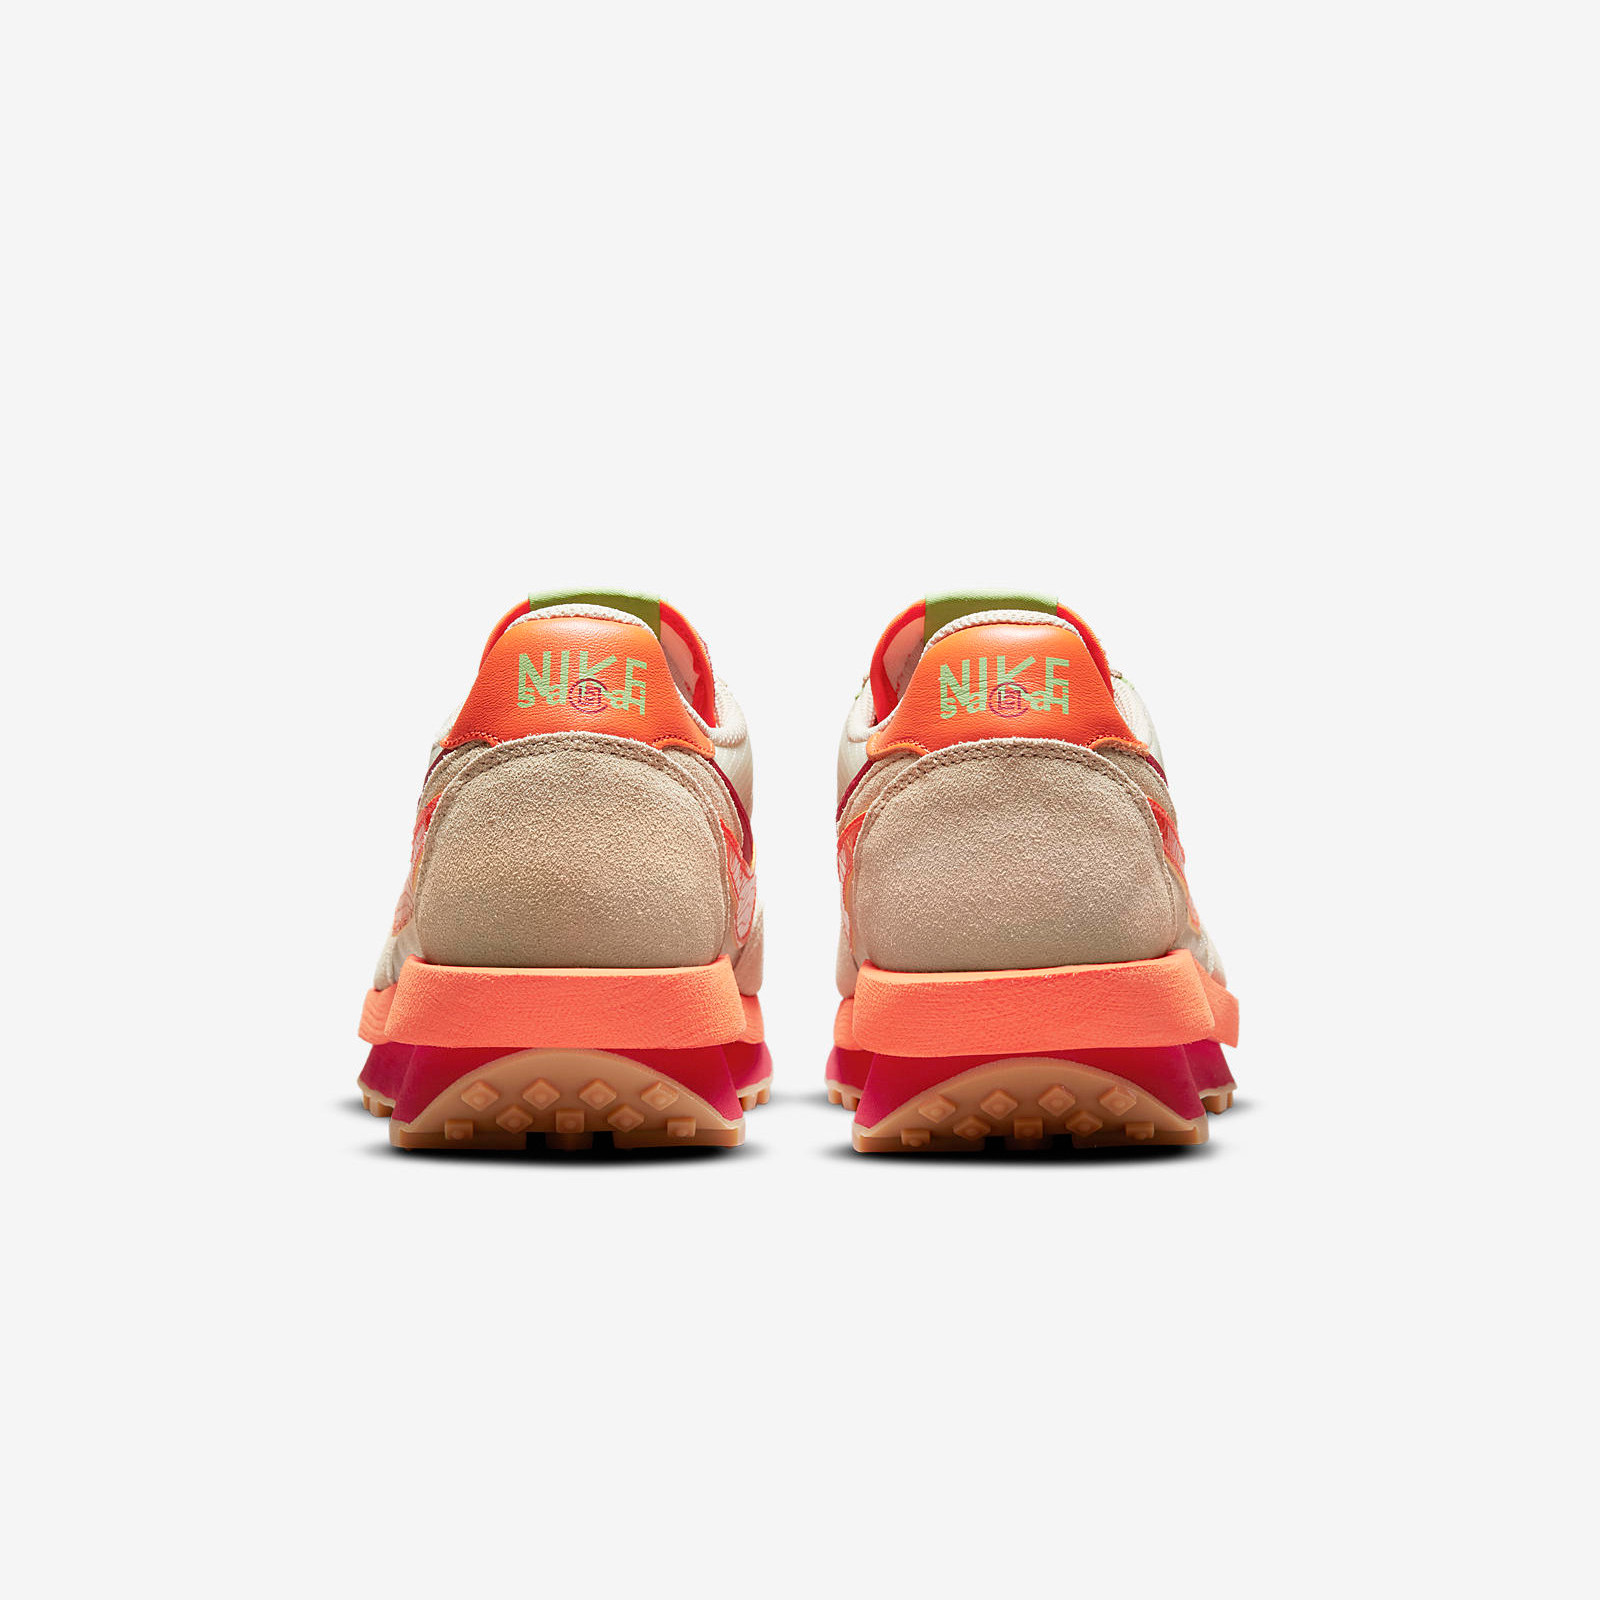 Nike x Sacai x CLOT
LDWaffle
Orange / Red